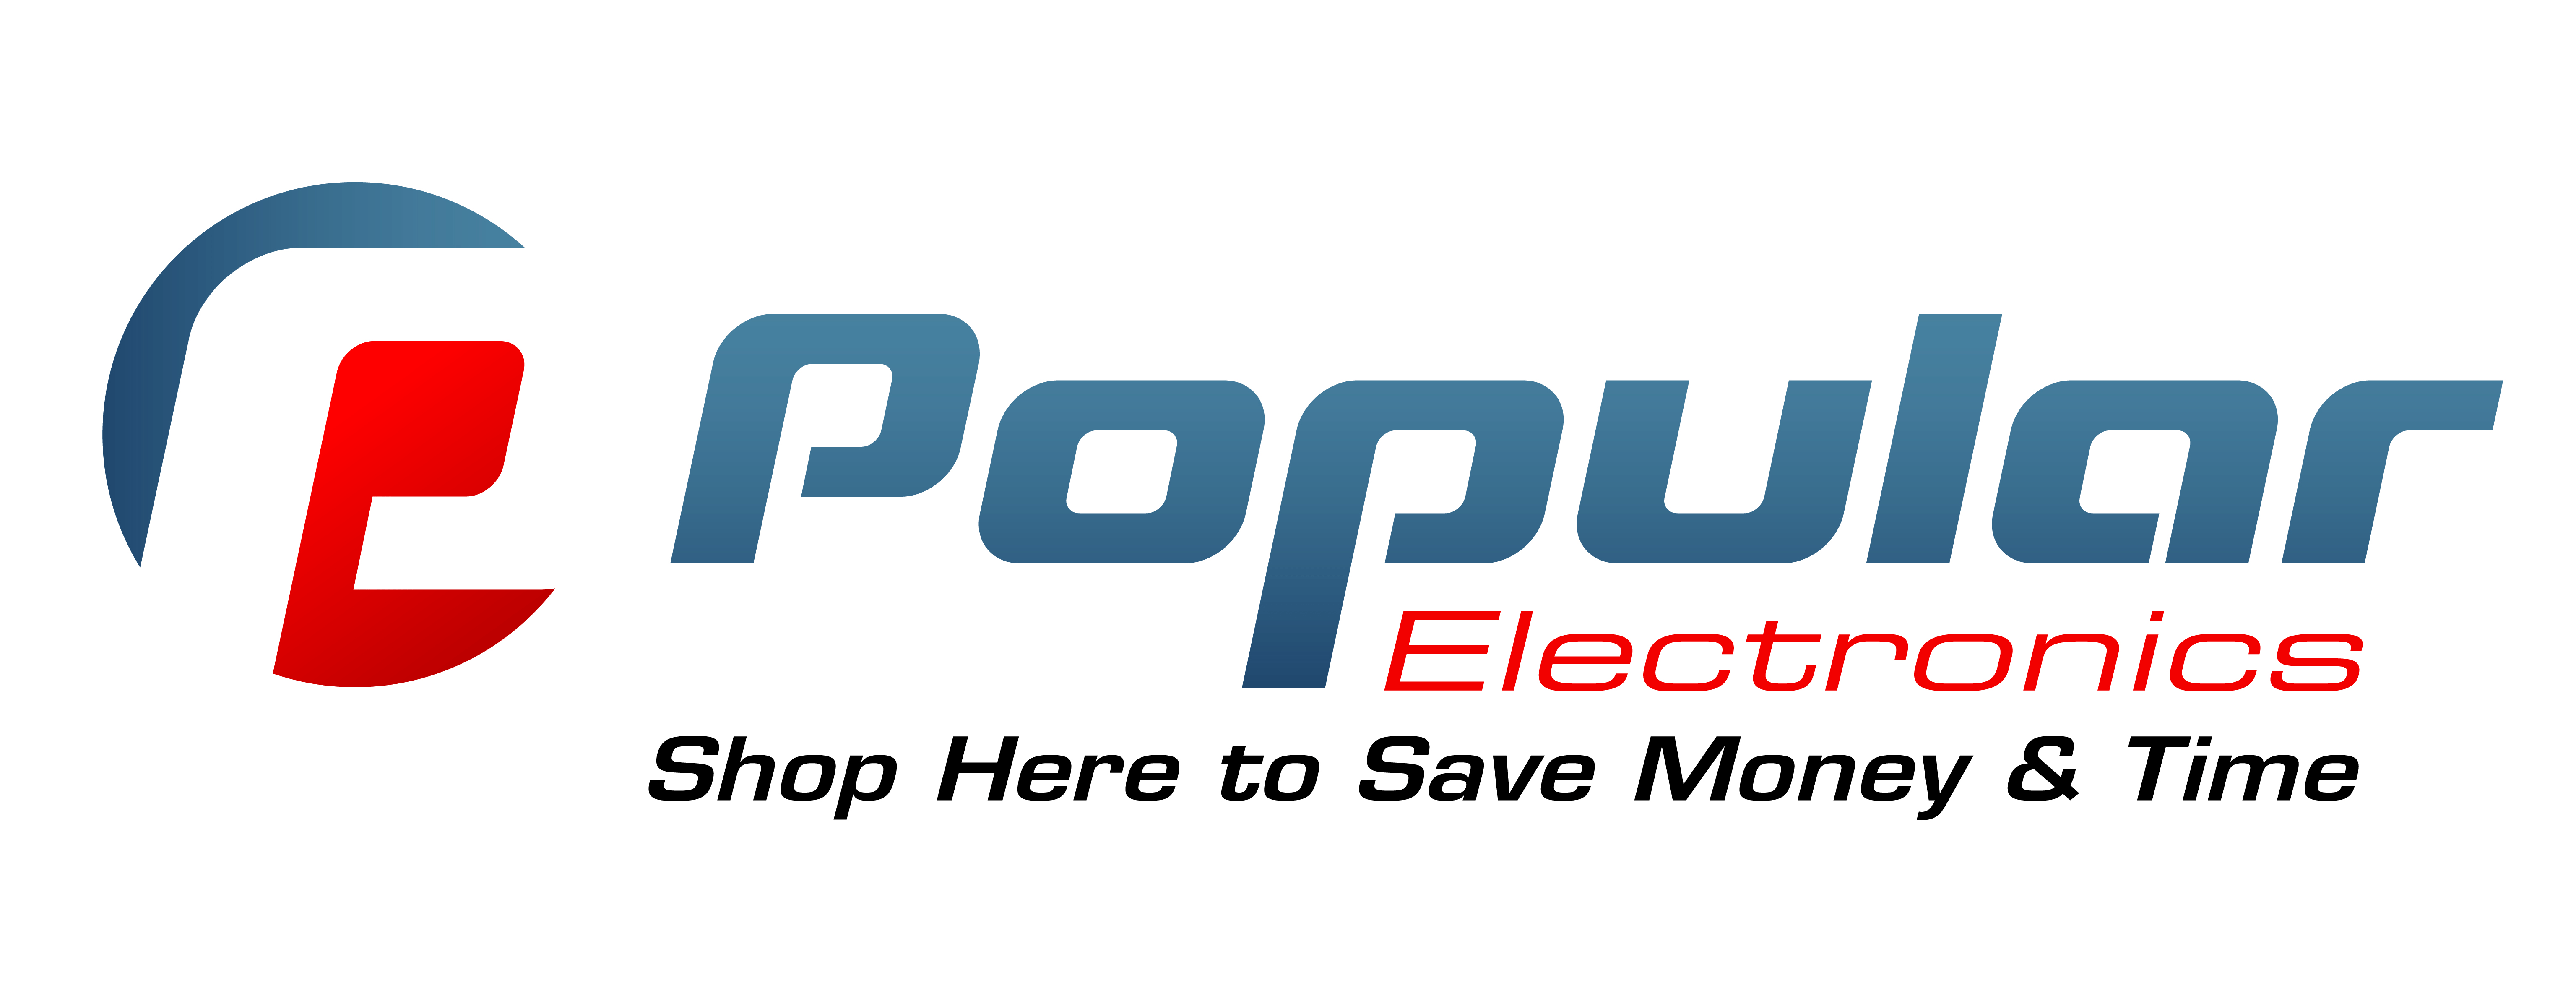 Electronic Store Logo - Products – Popular Electronics